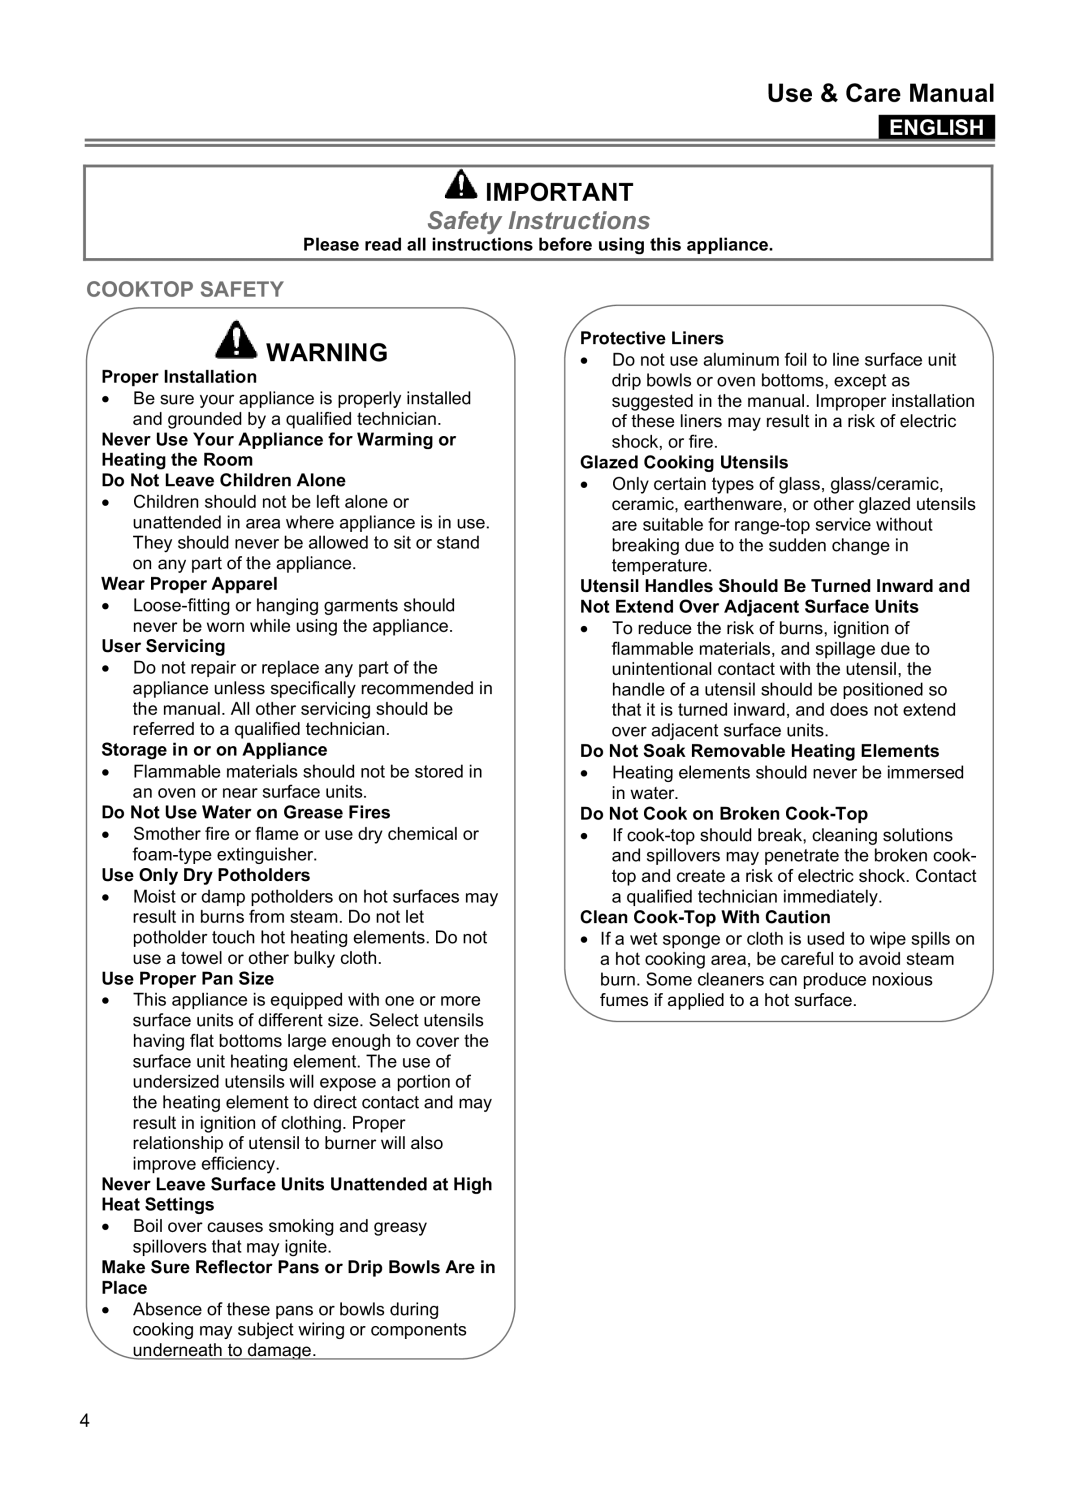 Blomberg CTE 36500, CTE 30400 manuel dutilisation Safety Instructions, Cooktop Safety, Use & Care Manual, English 